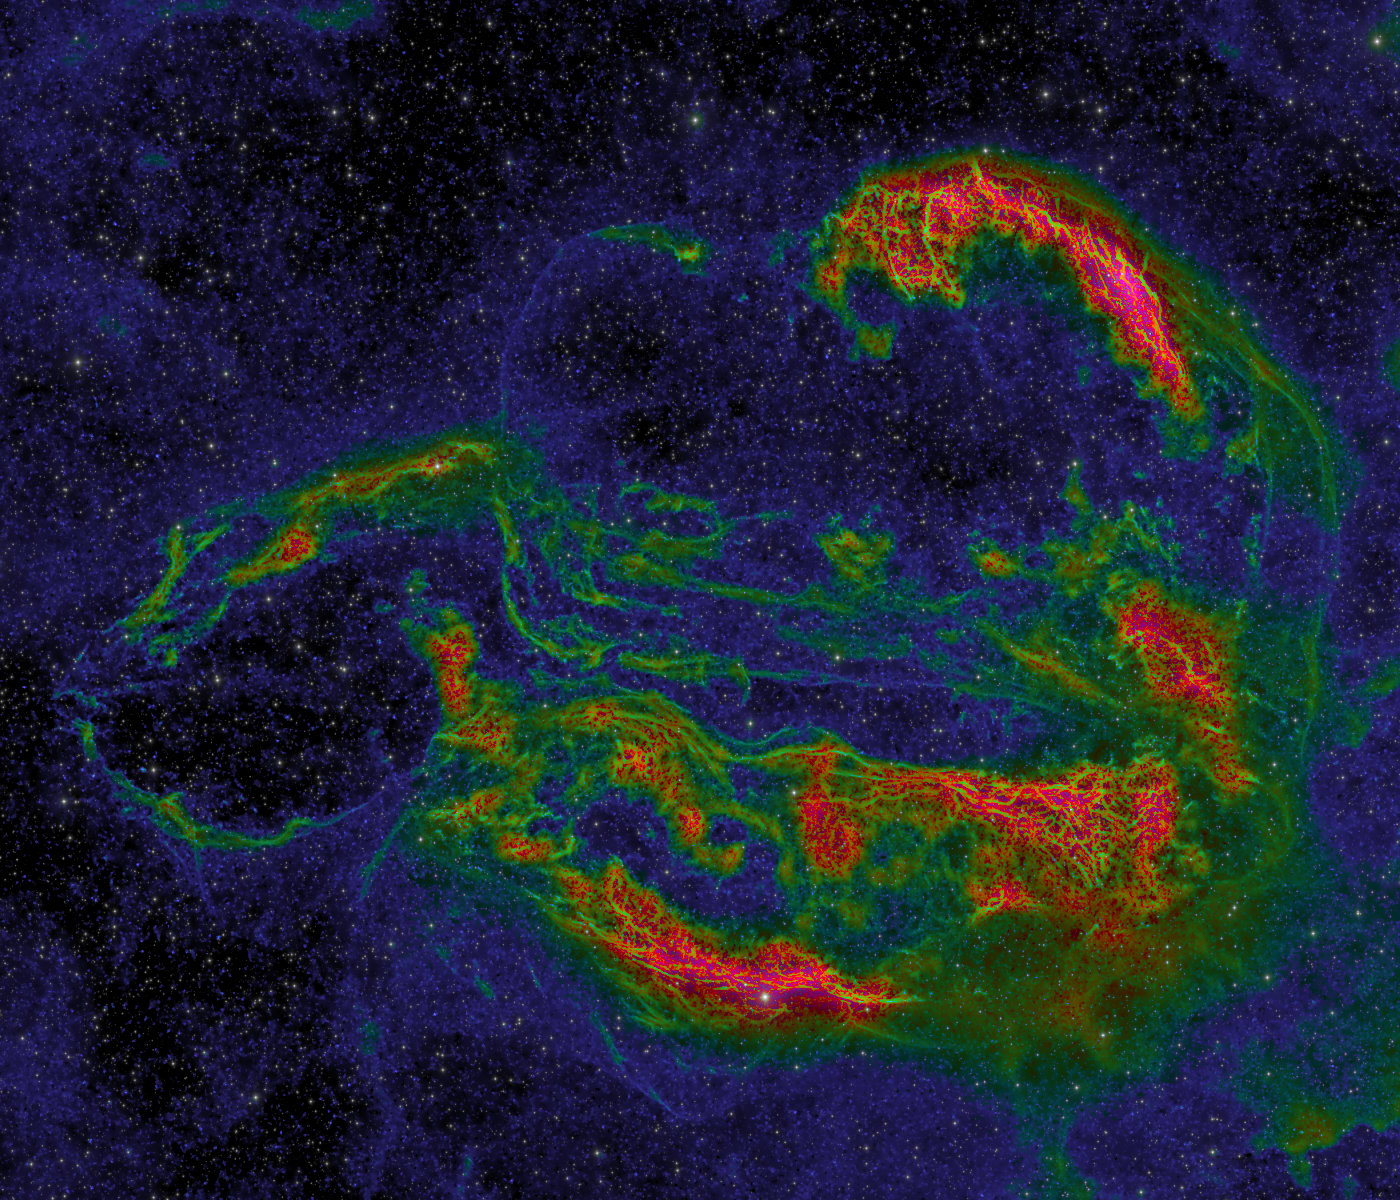 Supernova remnant SH2-103 (Veil Nebula) in H-alpha